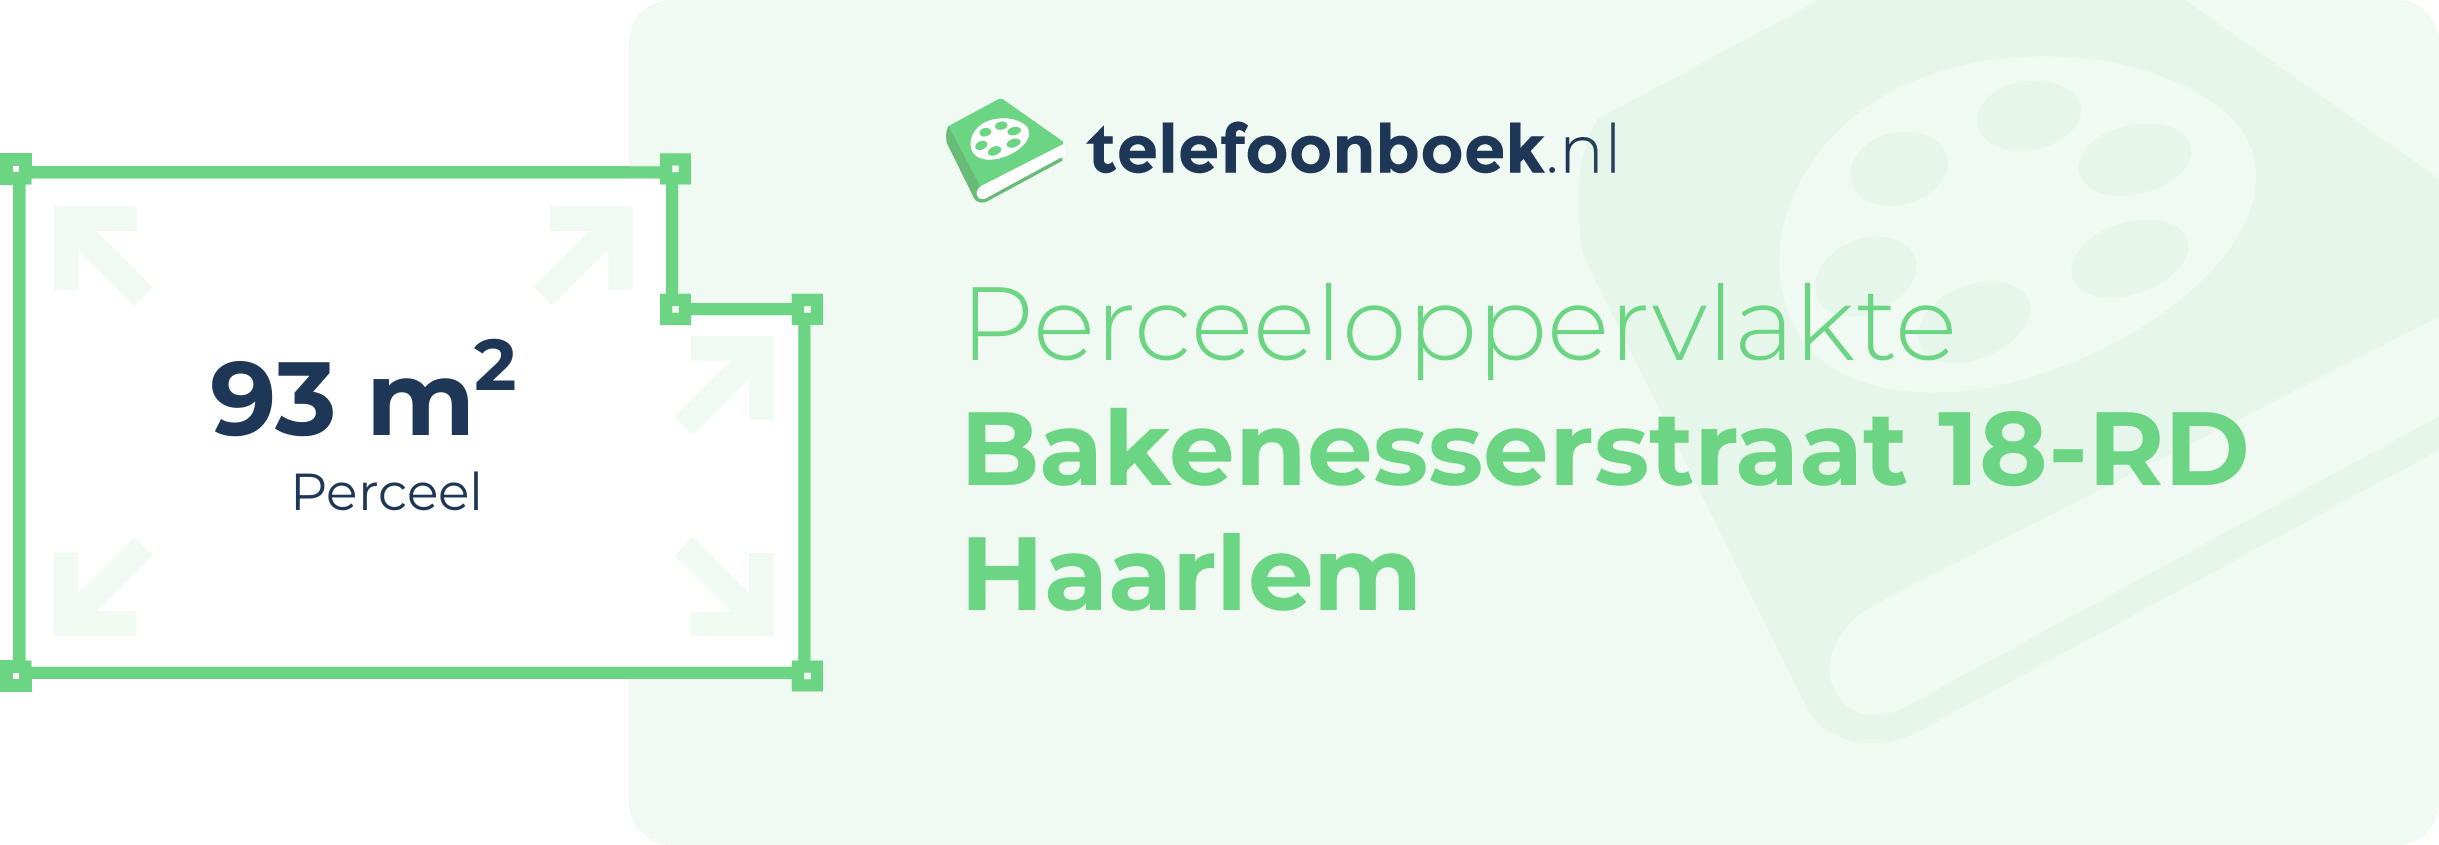 Perceeloppervlakte Bakenesserstraat 18-RD Haarlem